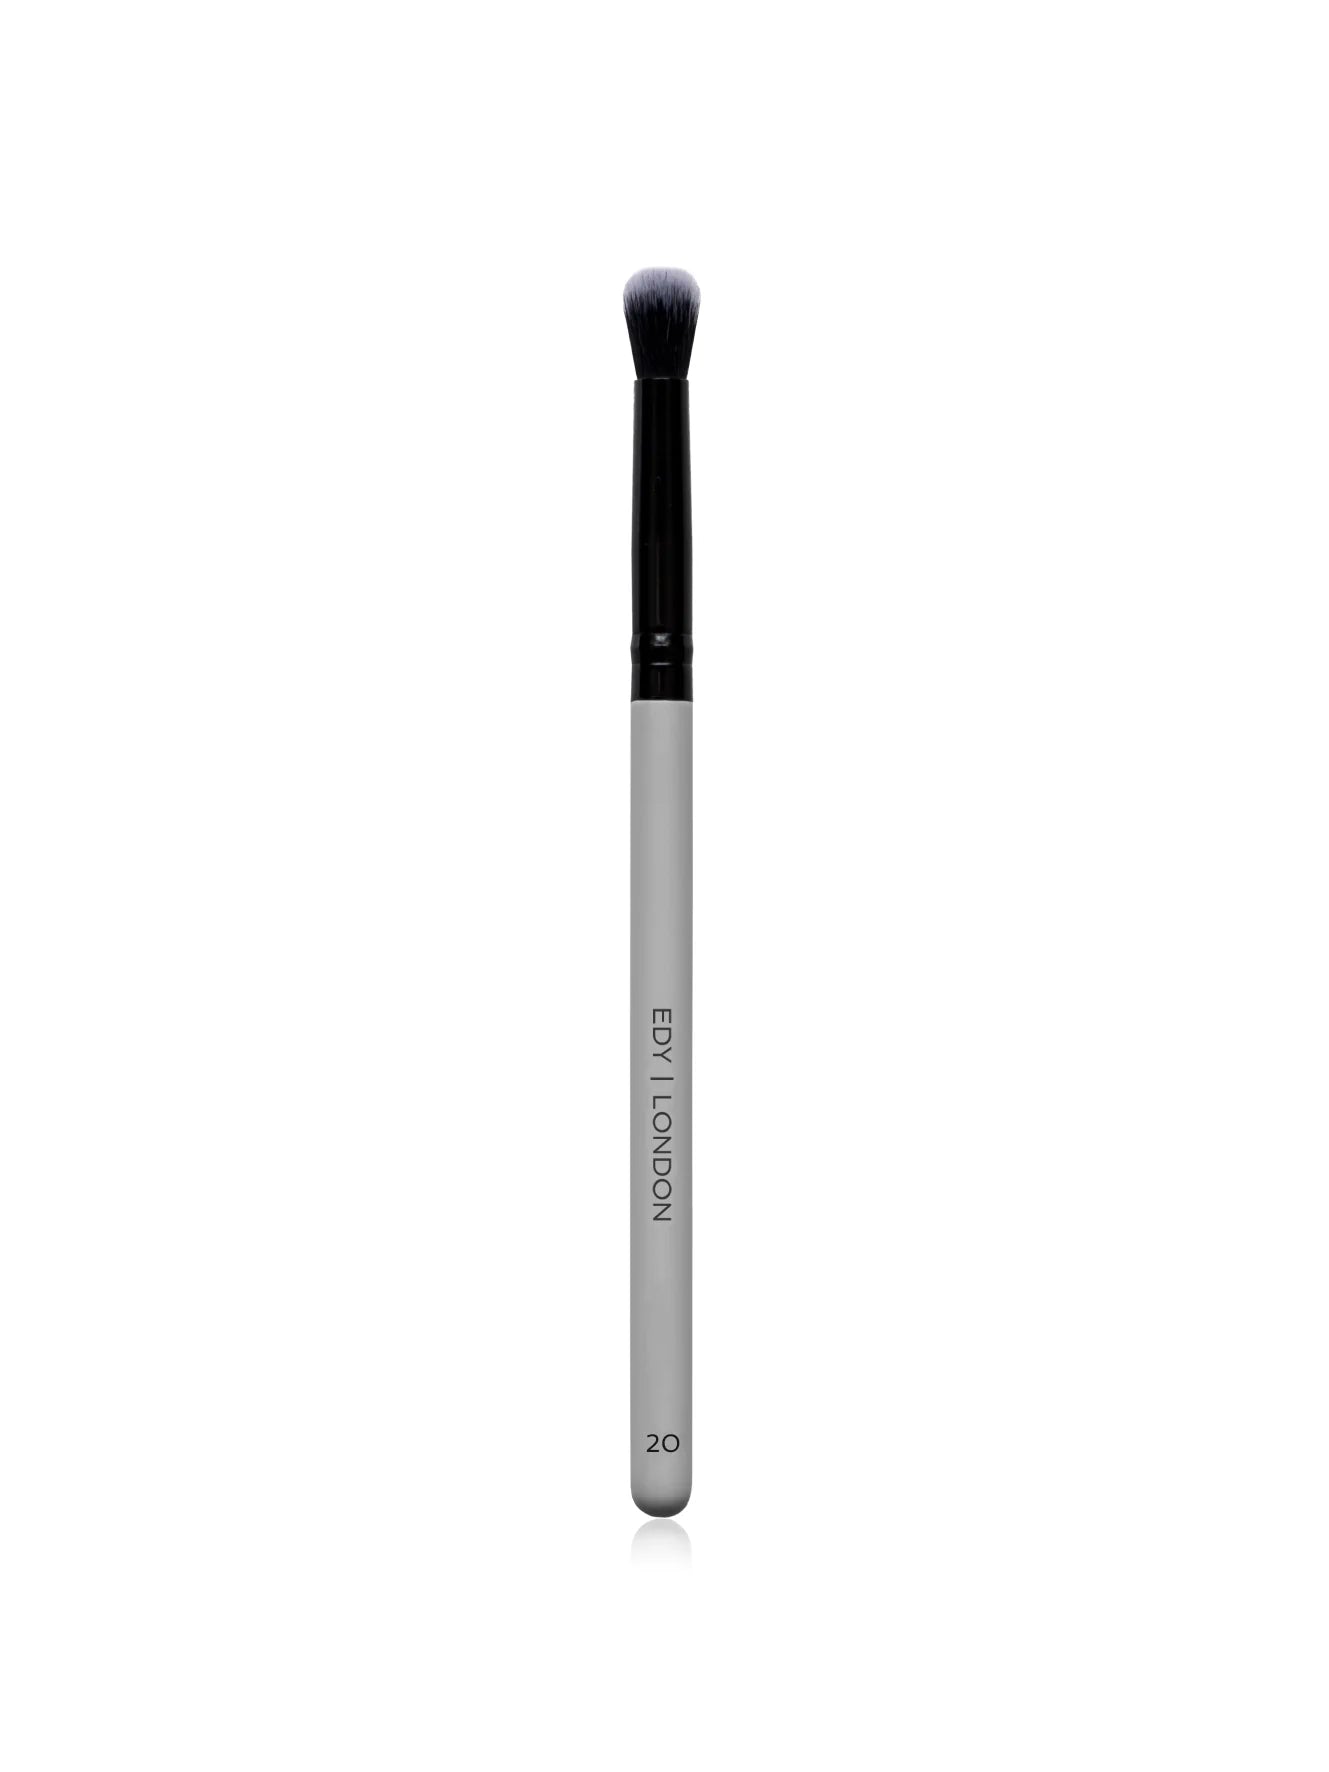 Soft Blender / Concealer Brush 20 Make-up Brush EDY LONDON Cool Grey   - EDY LONDON PRODUCTS UK - The Best Makeup Brushes - shop.edy.london